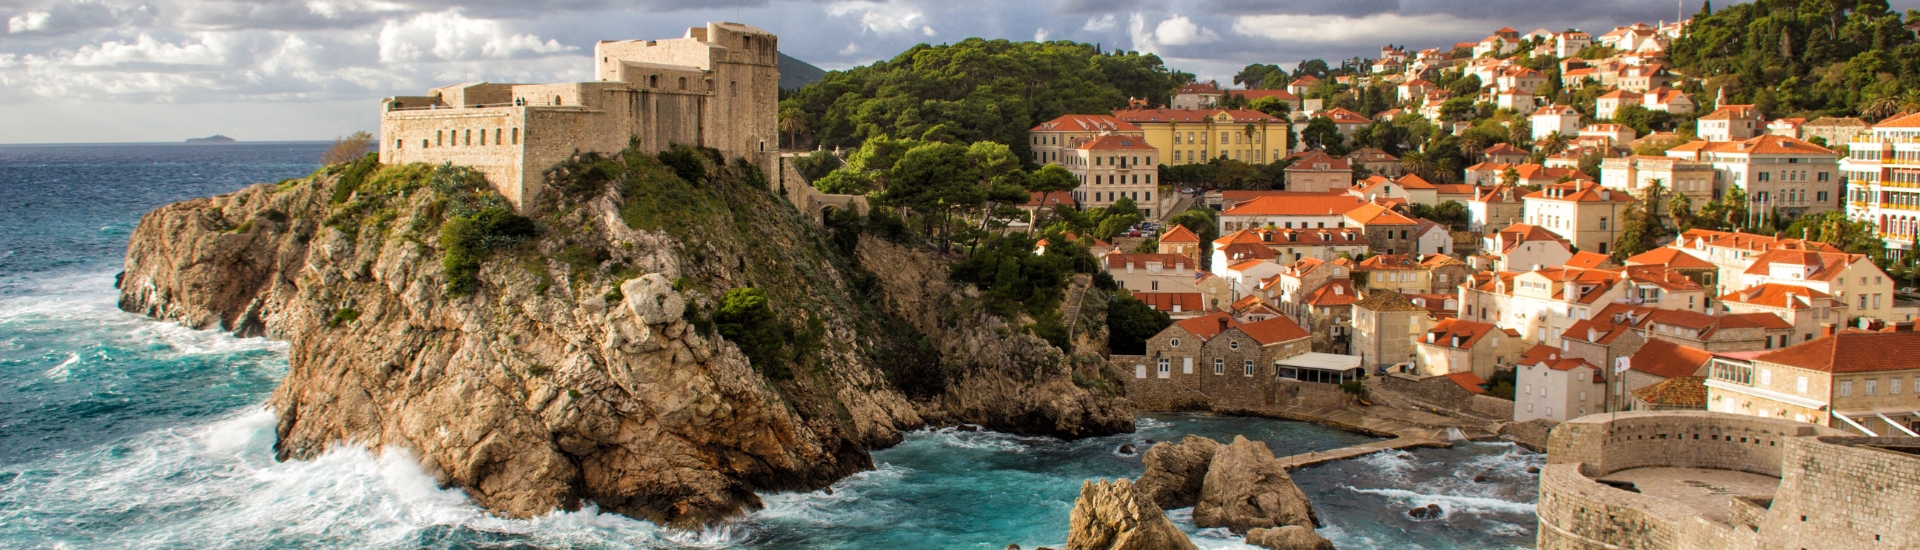 Waves crashing at rocky cliffs on coast of Dubrovnik, Croatia